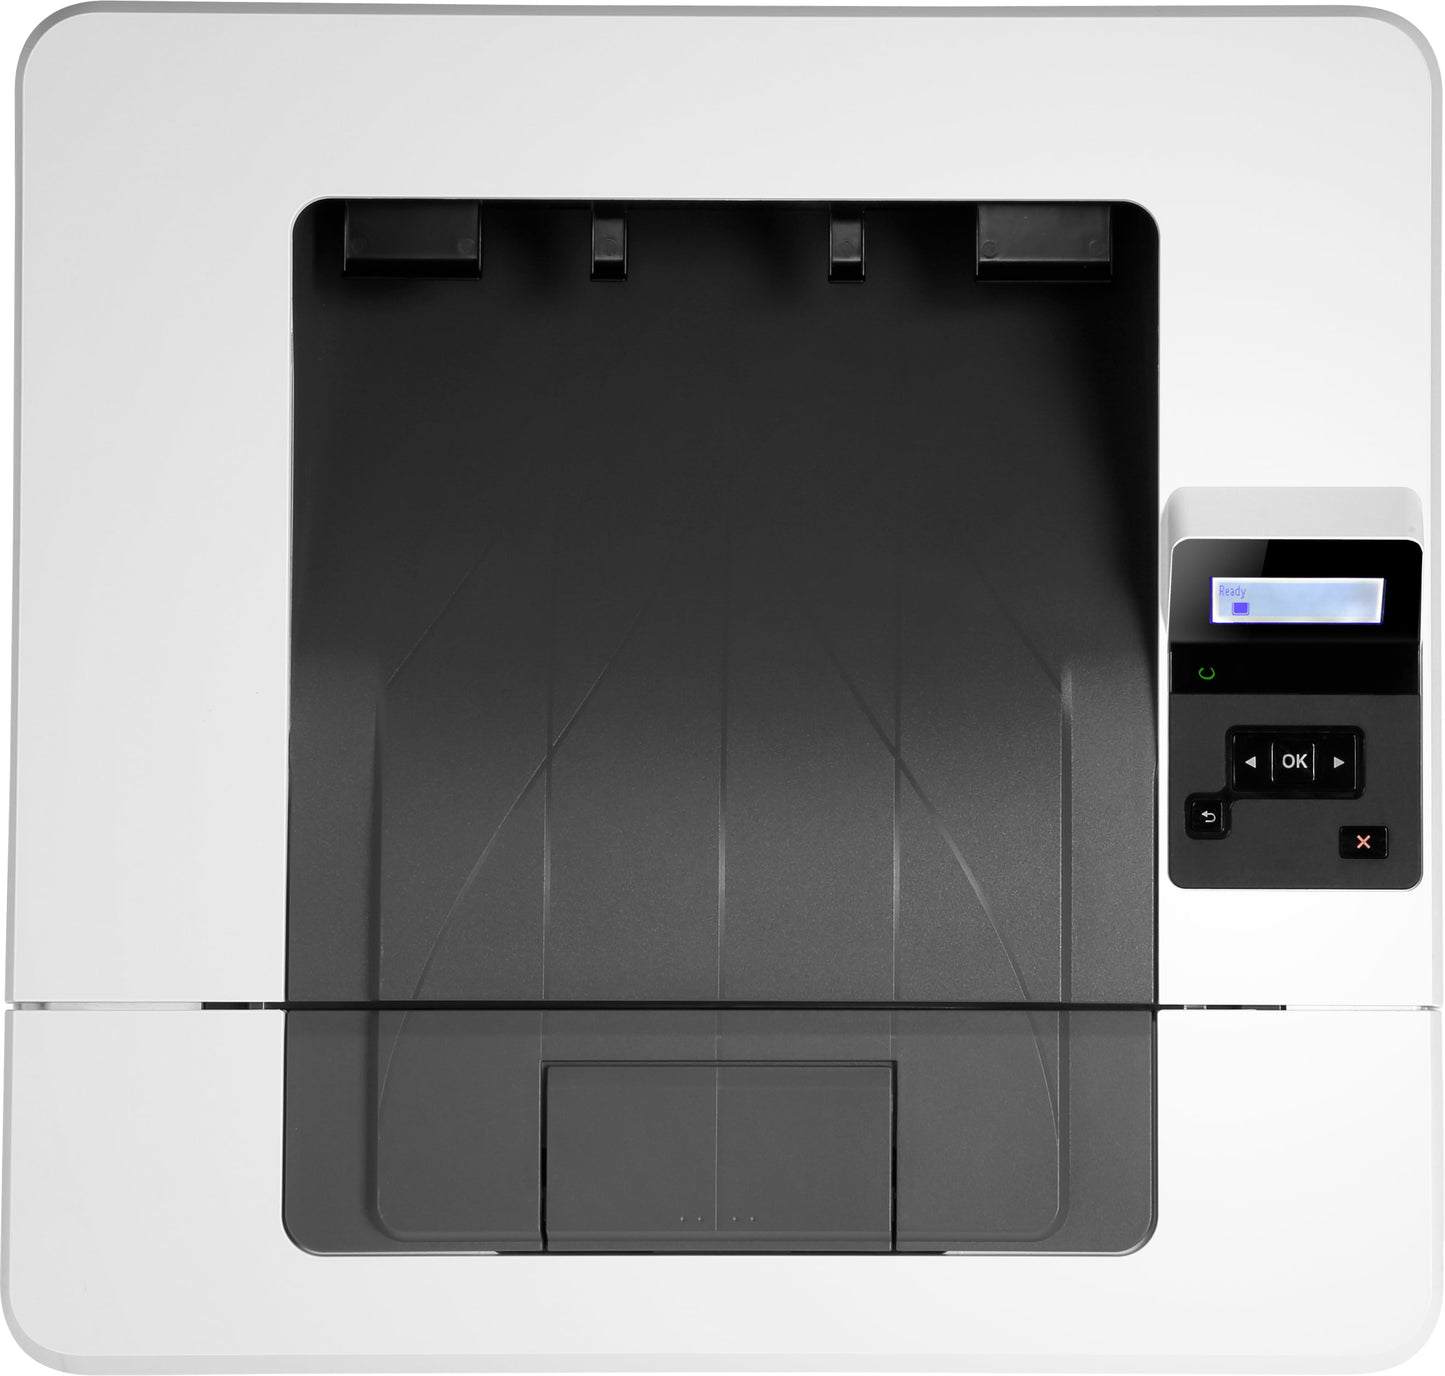 Impresora Laser Blanco y Negro HP M404n Red USB